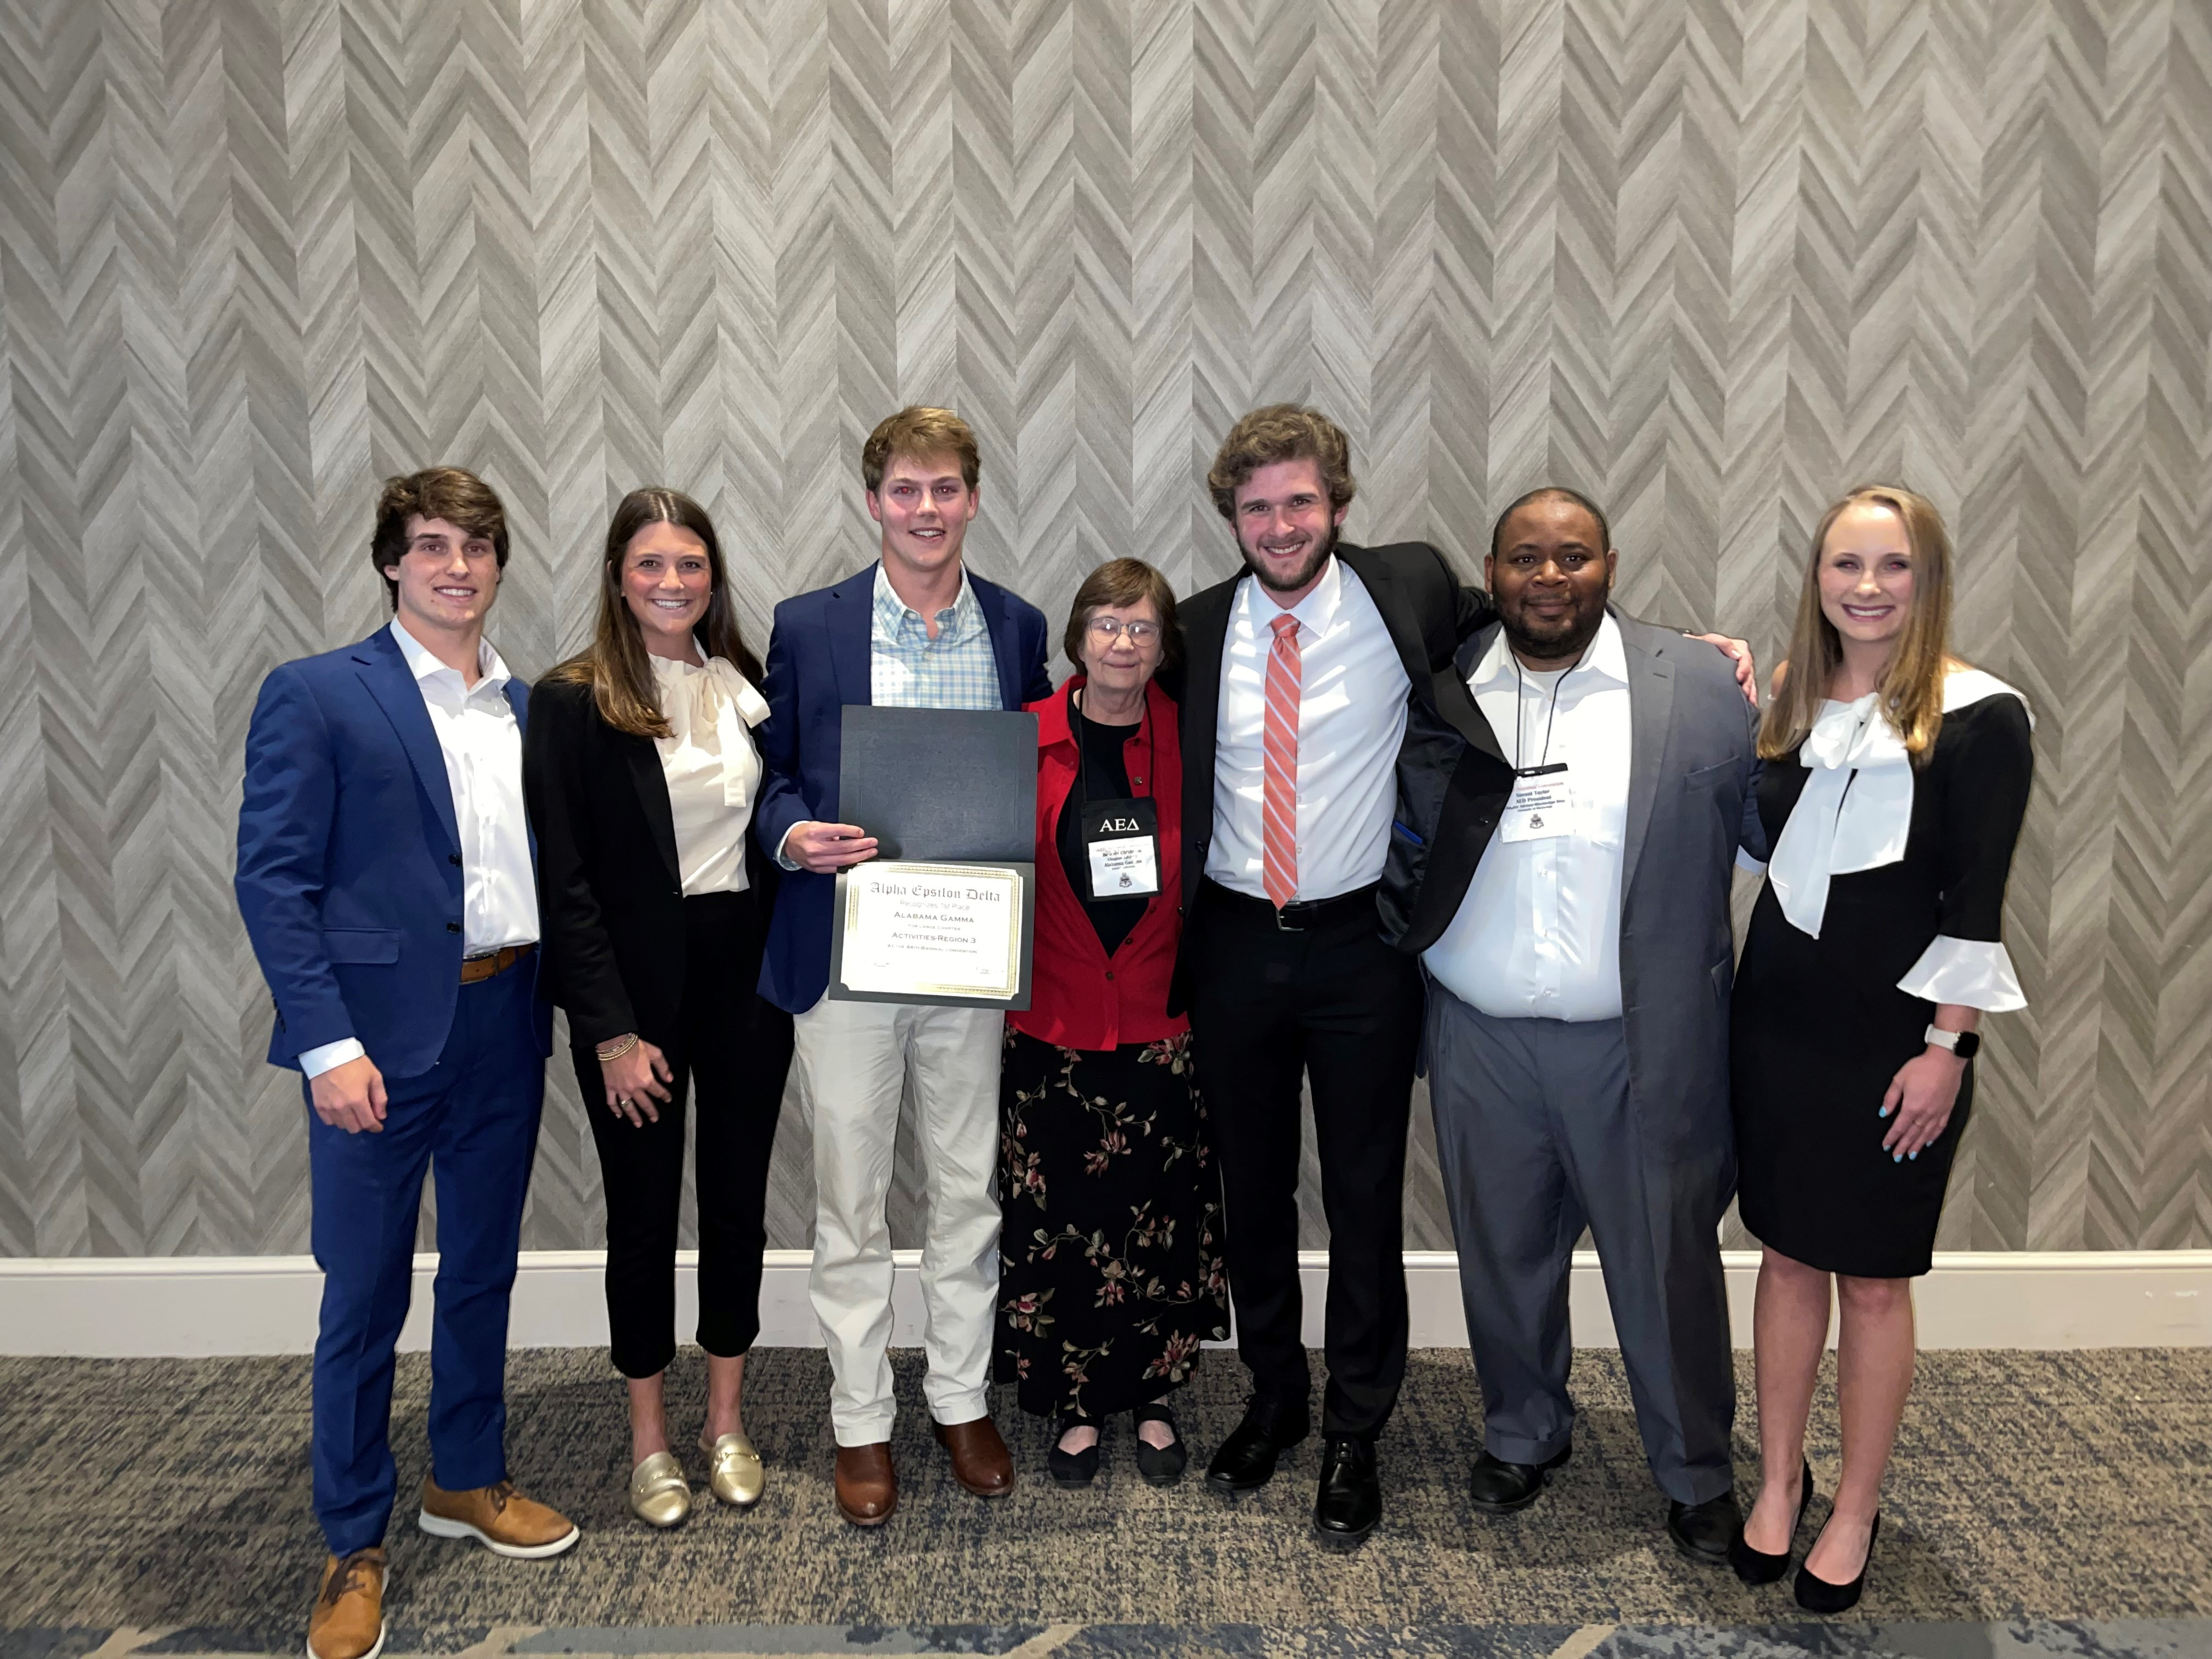 Auburn’s Alabama Gamma chapter of Alpha Epsilon Delta attends national convention, wins multiple awards